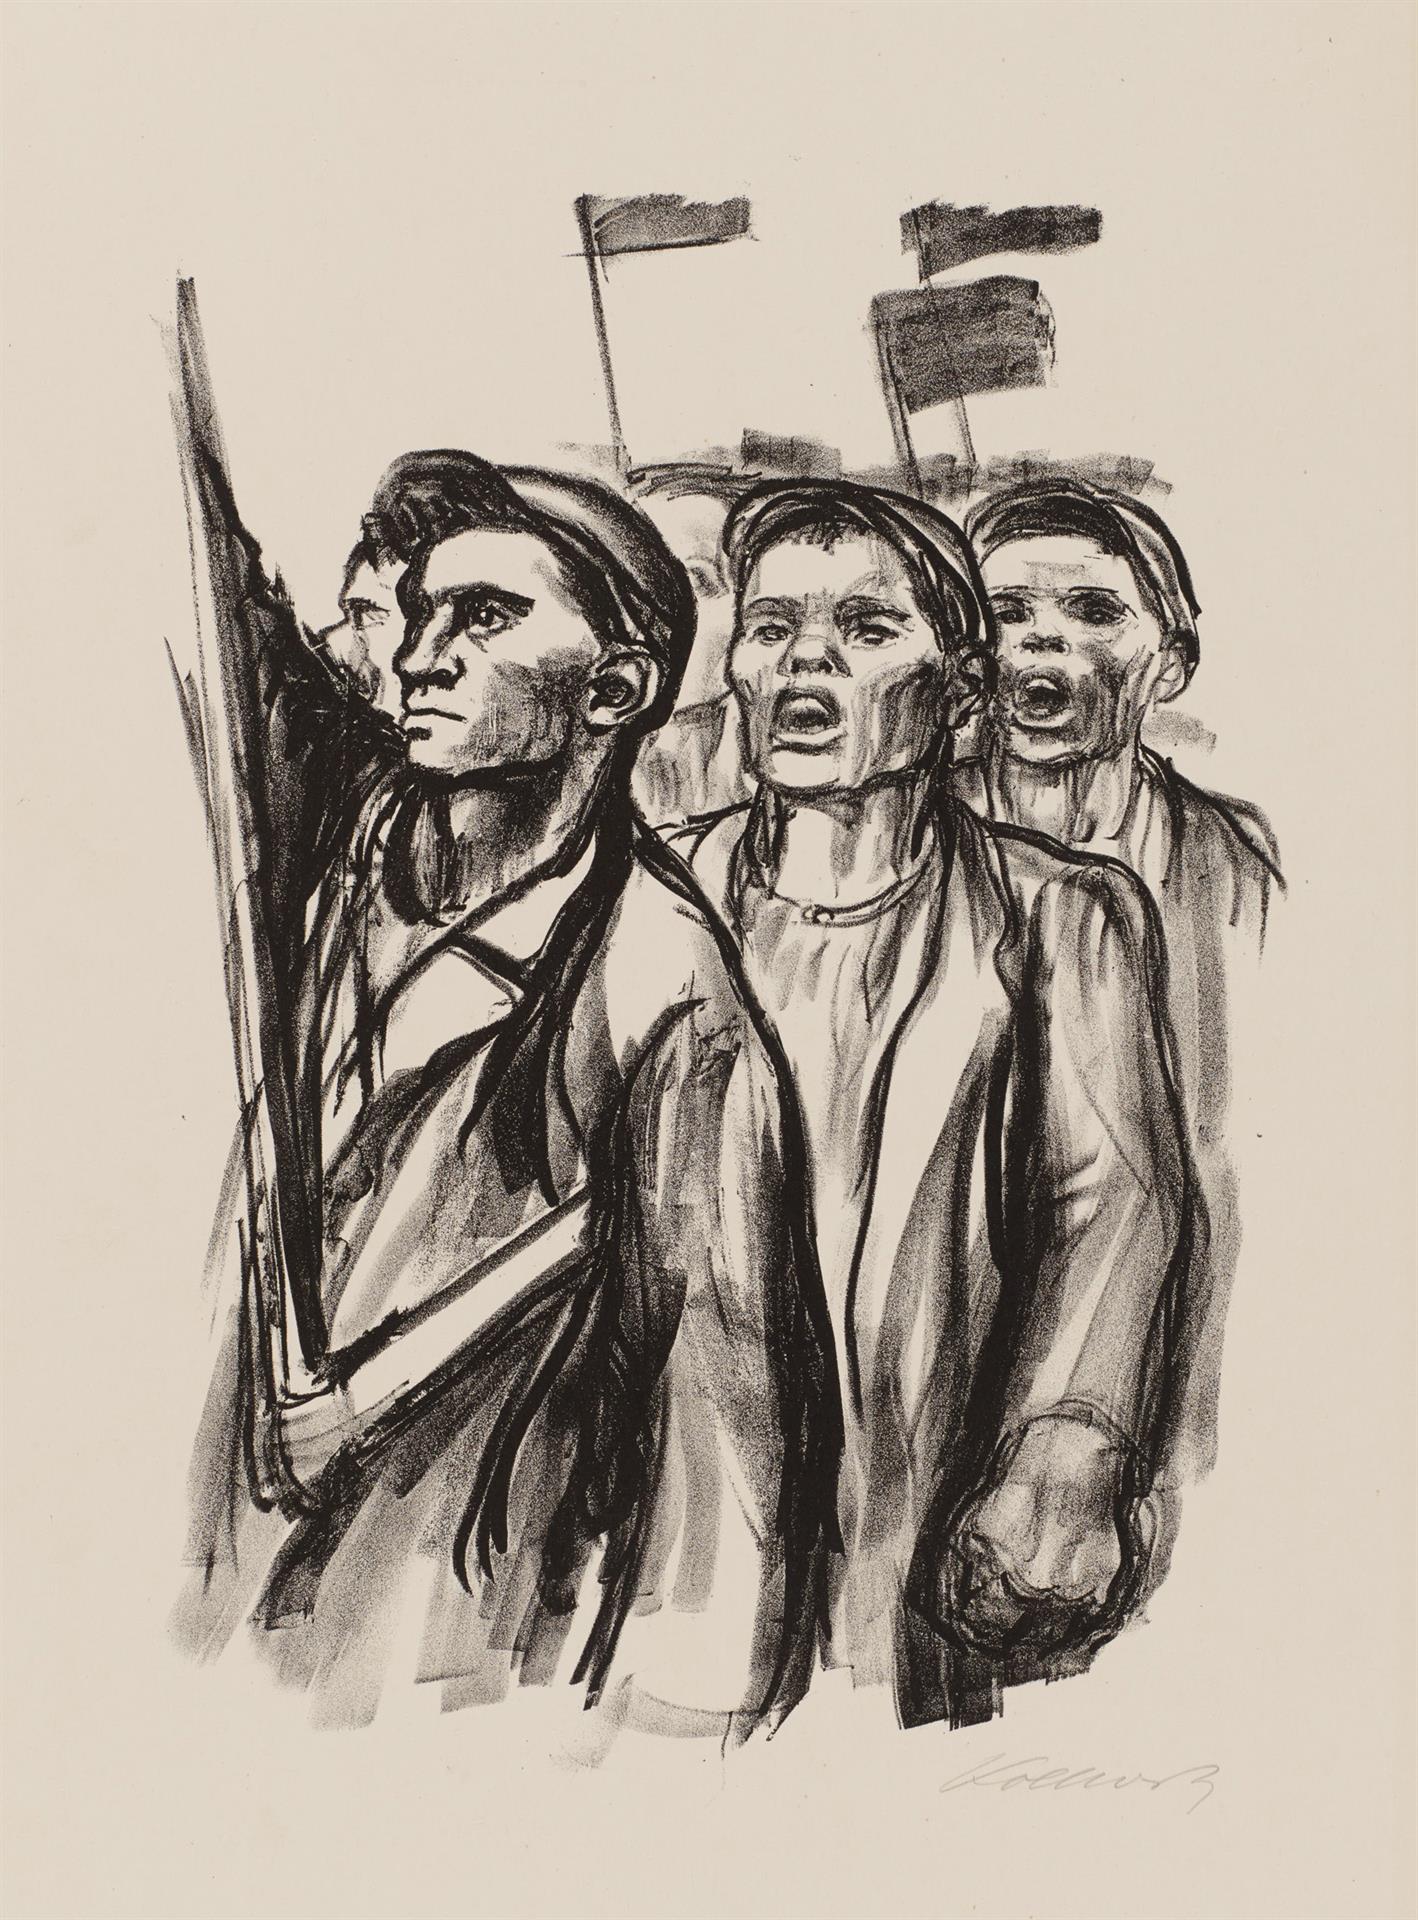 Käthe Kollwitz, Manifestation, version finale, 1931, lithographie au crayon (report), Kn 252 II c, Collection Kollwitz de Cologne © Käthe Kollwitz Museum Köln